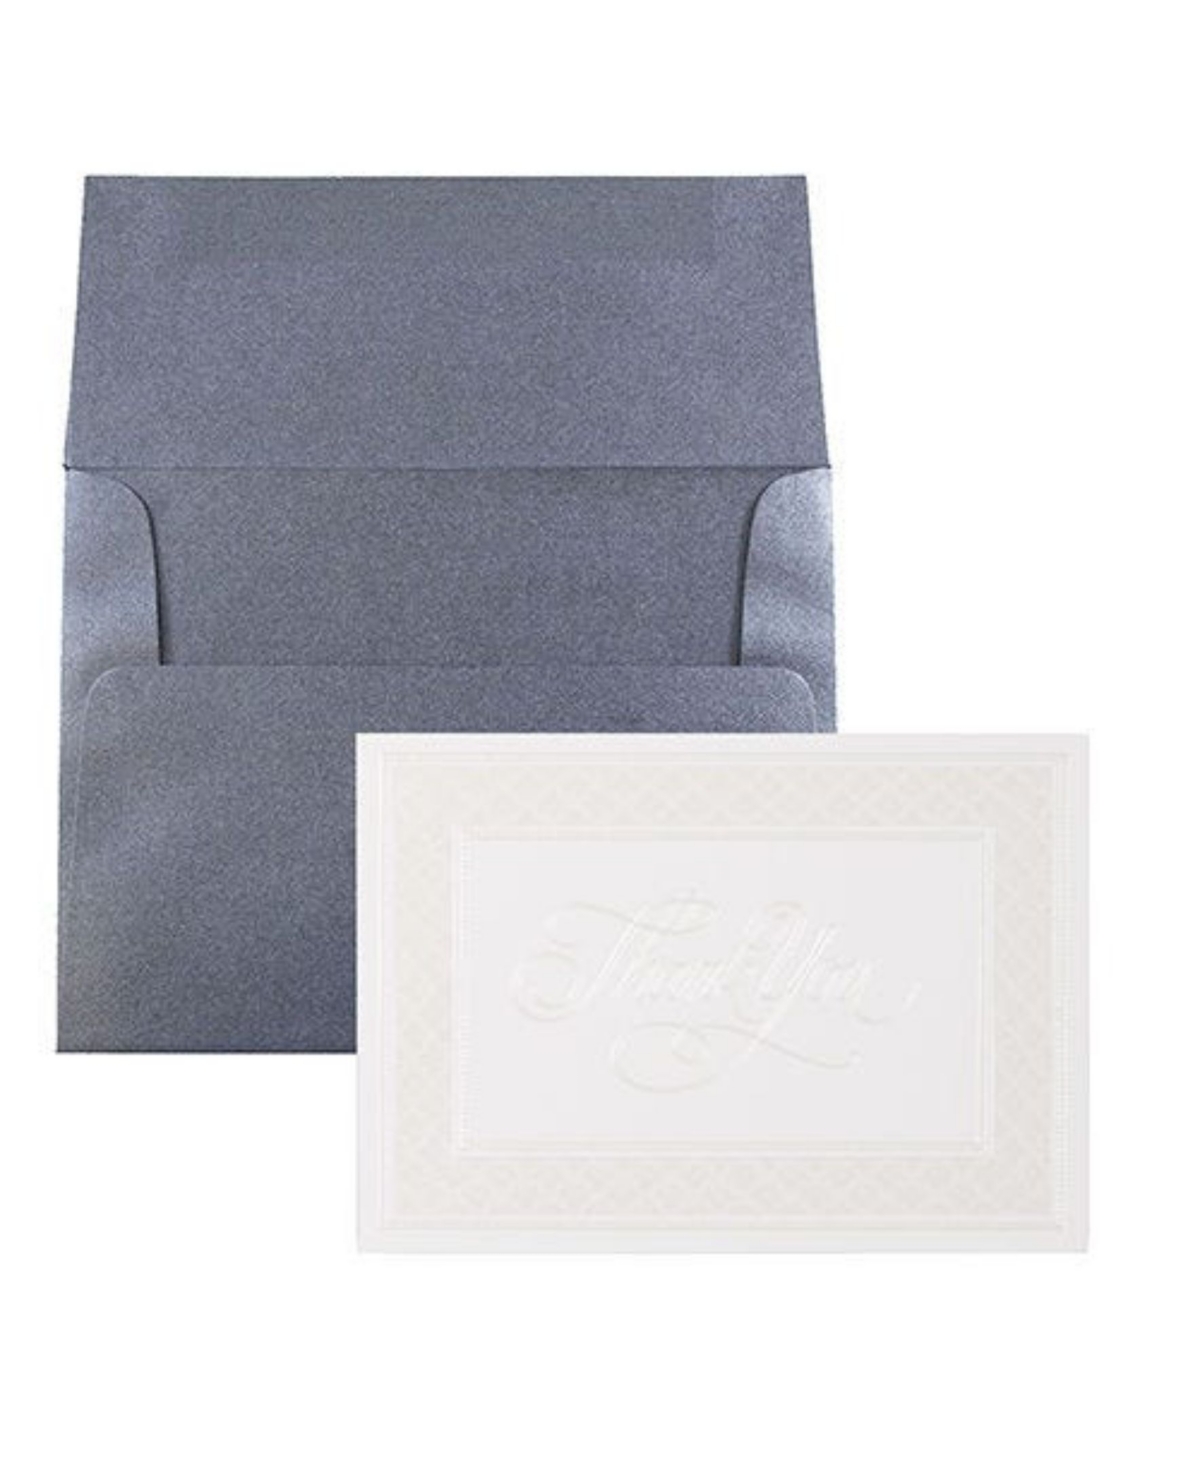 Thank You Card Sets - 25 Cards and Envelopes - Border Cards Anthracite Envelopes